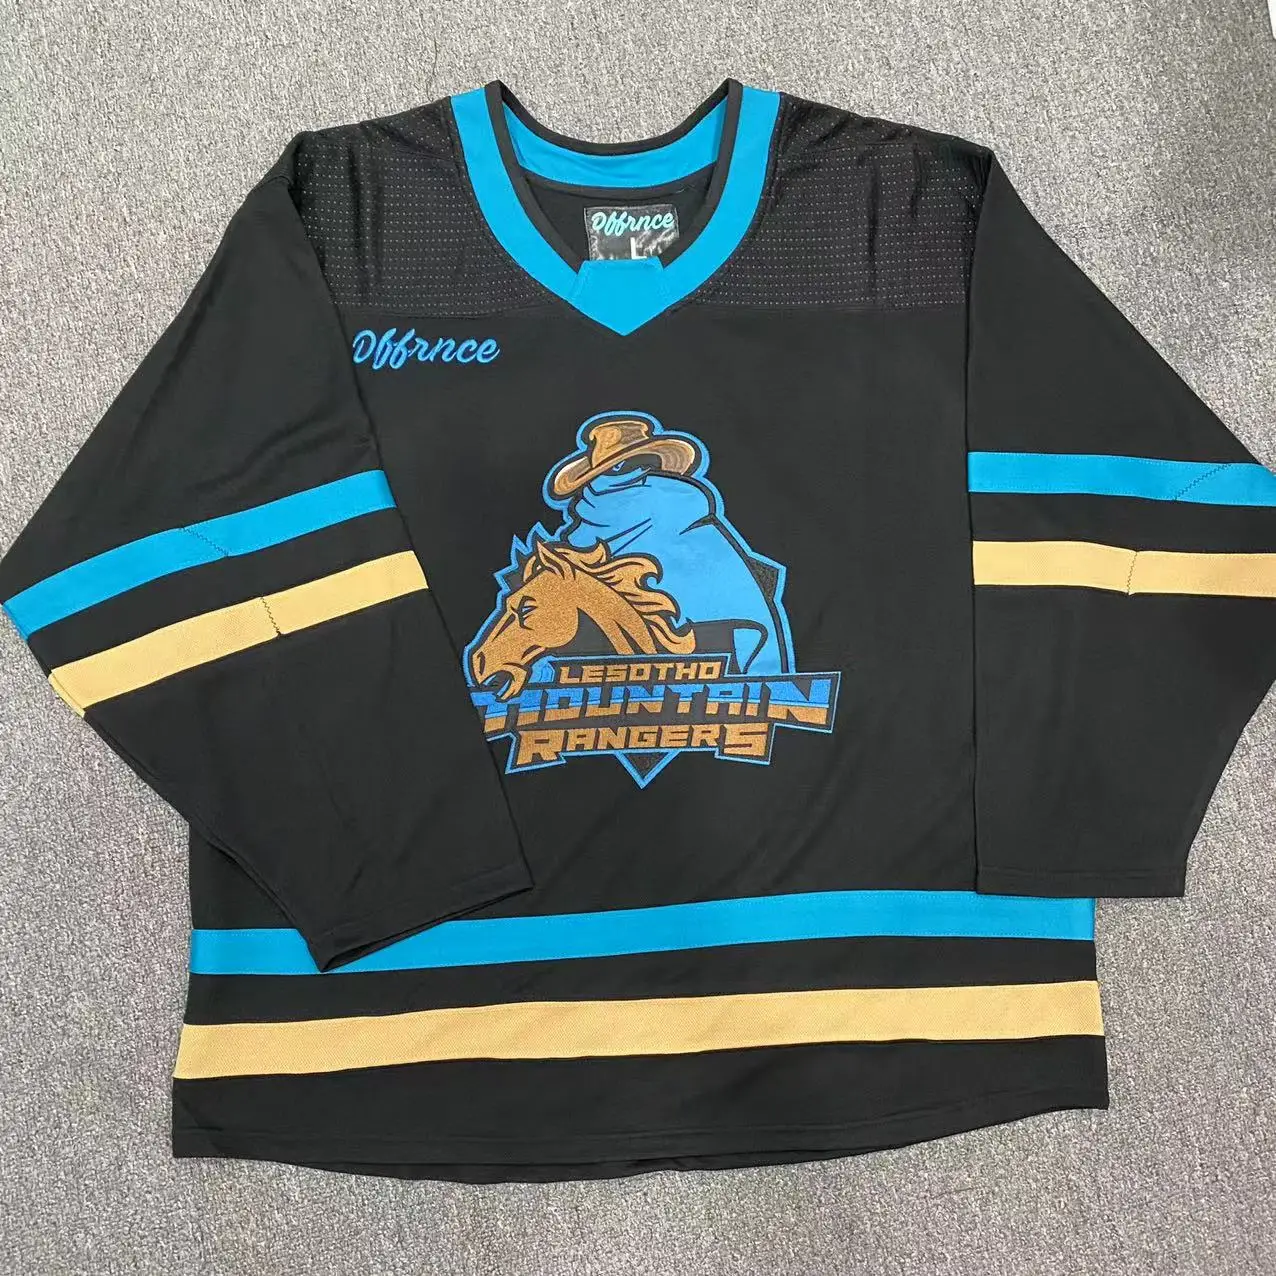 Wholesale EALER custom team authentic blackhawks ice hockey jersey From  m.